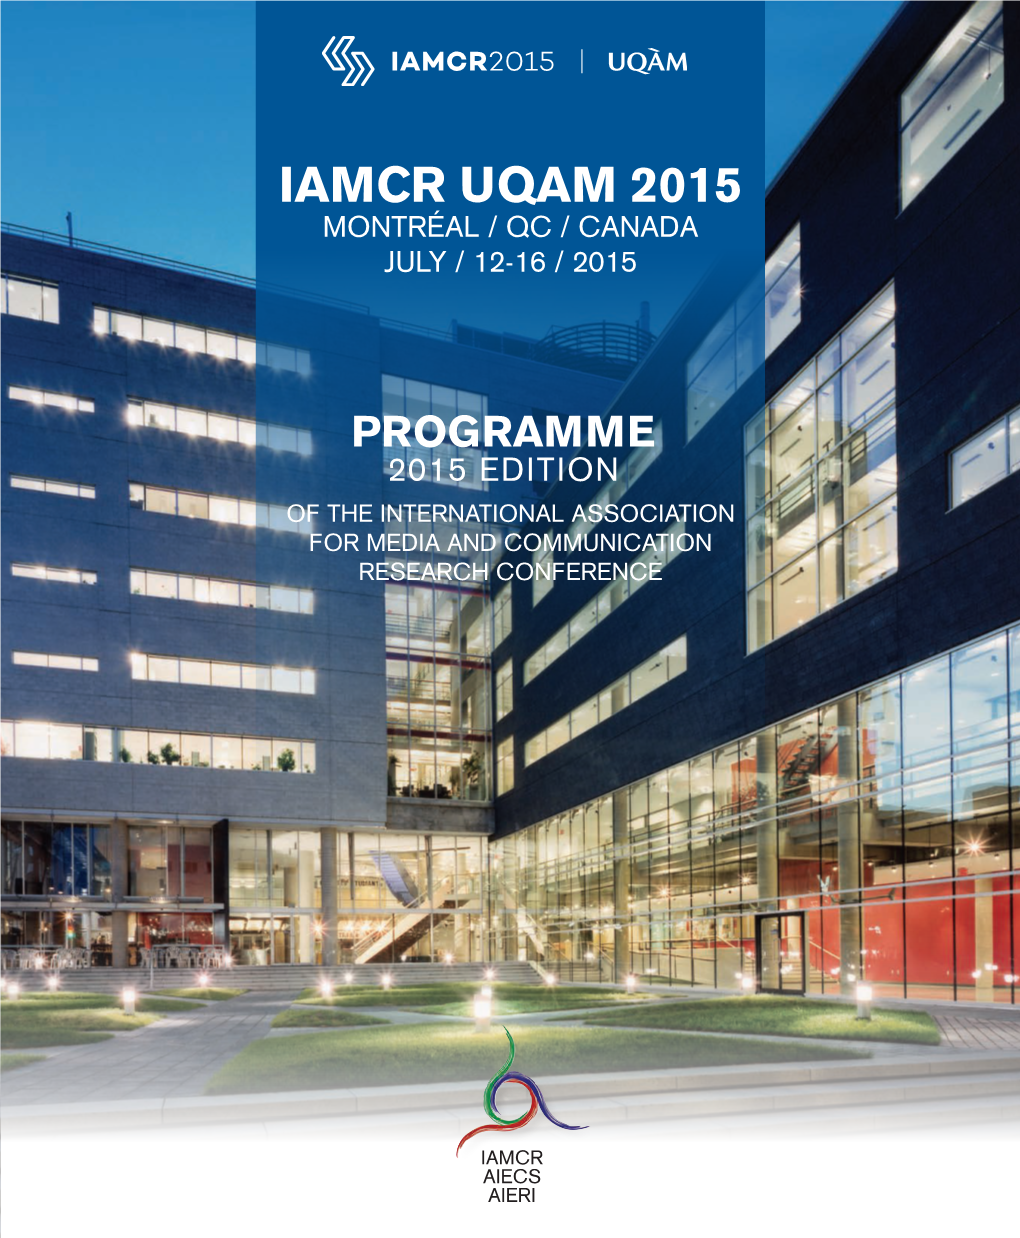 Iamcr Uqam 2015 Montréal / Qc / Canada July / 12-16 / 2015